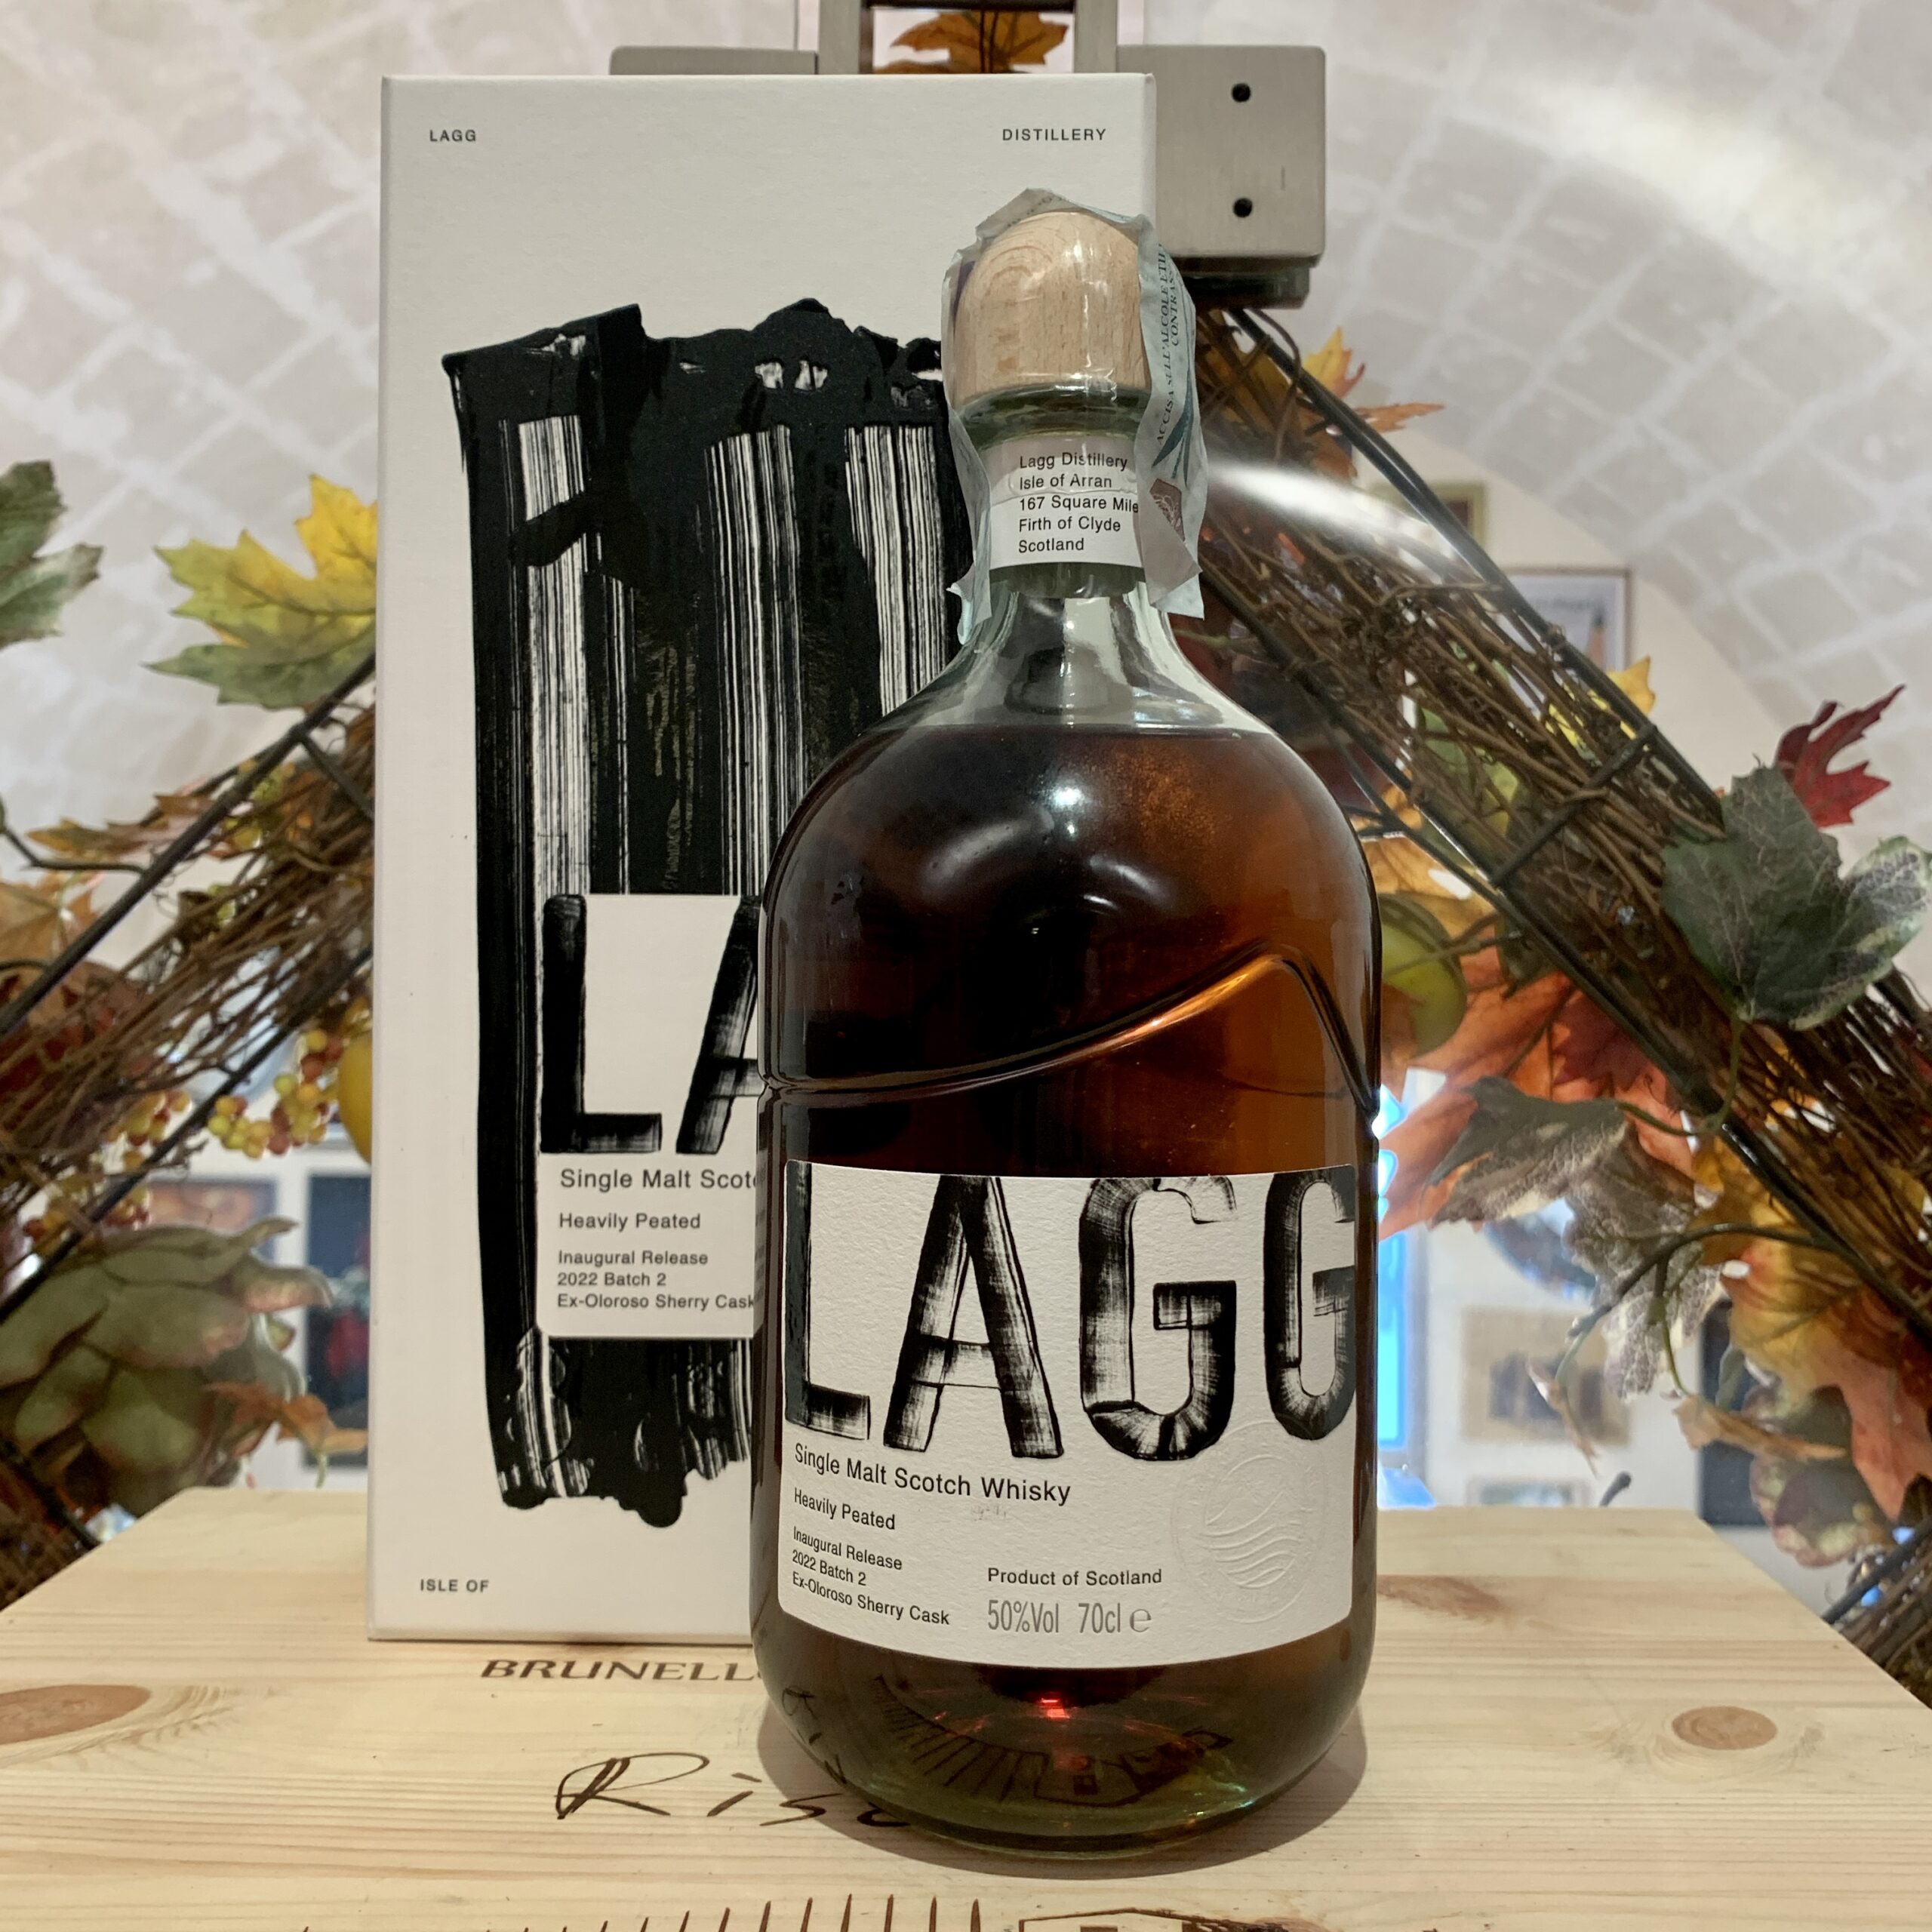 Lagg by Arran Single Malt Scotch Whisky Heavily Peated Inaugural Release 2022 Batch 2 Ex-Oloroso Sherry Cask